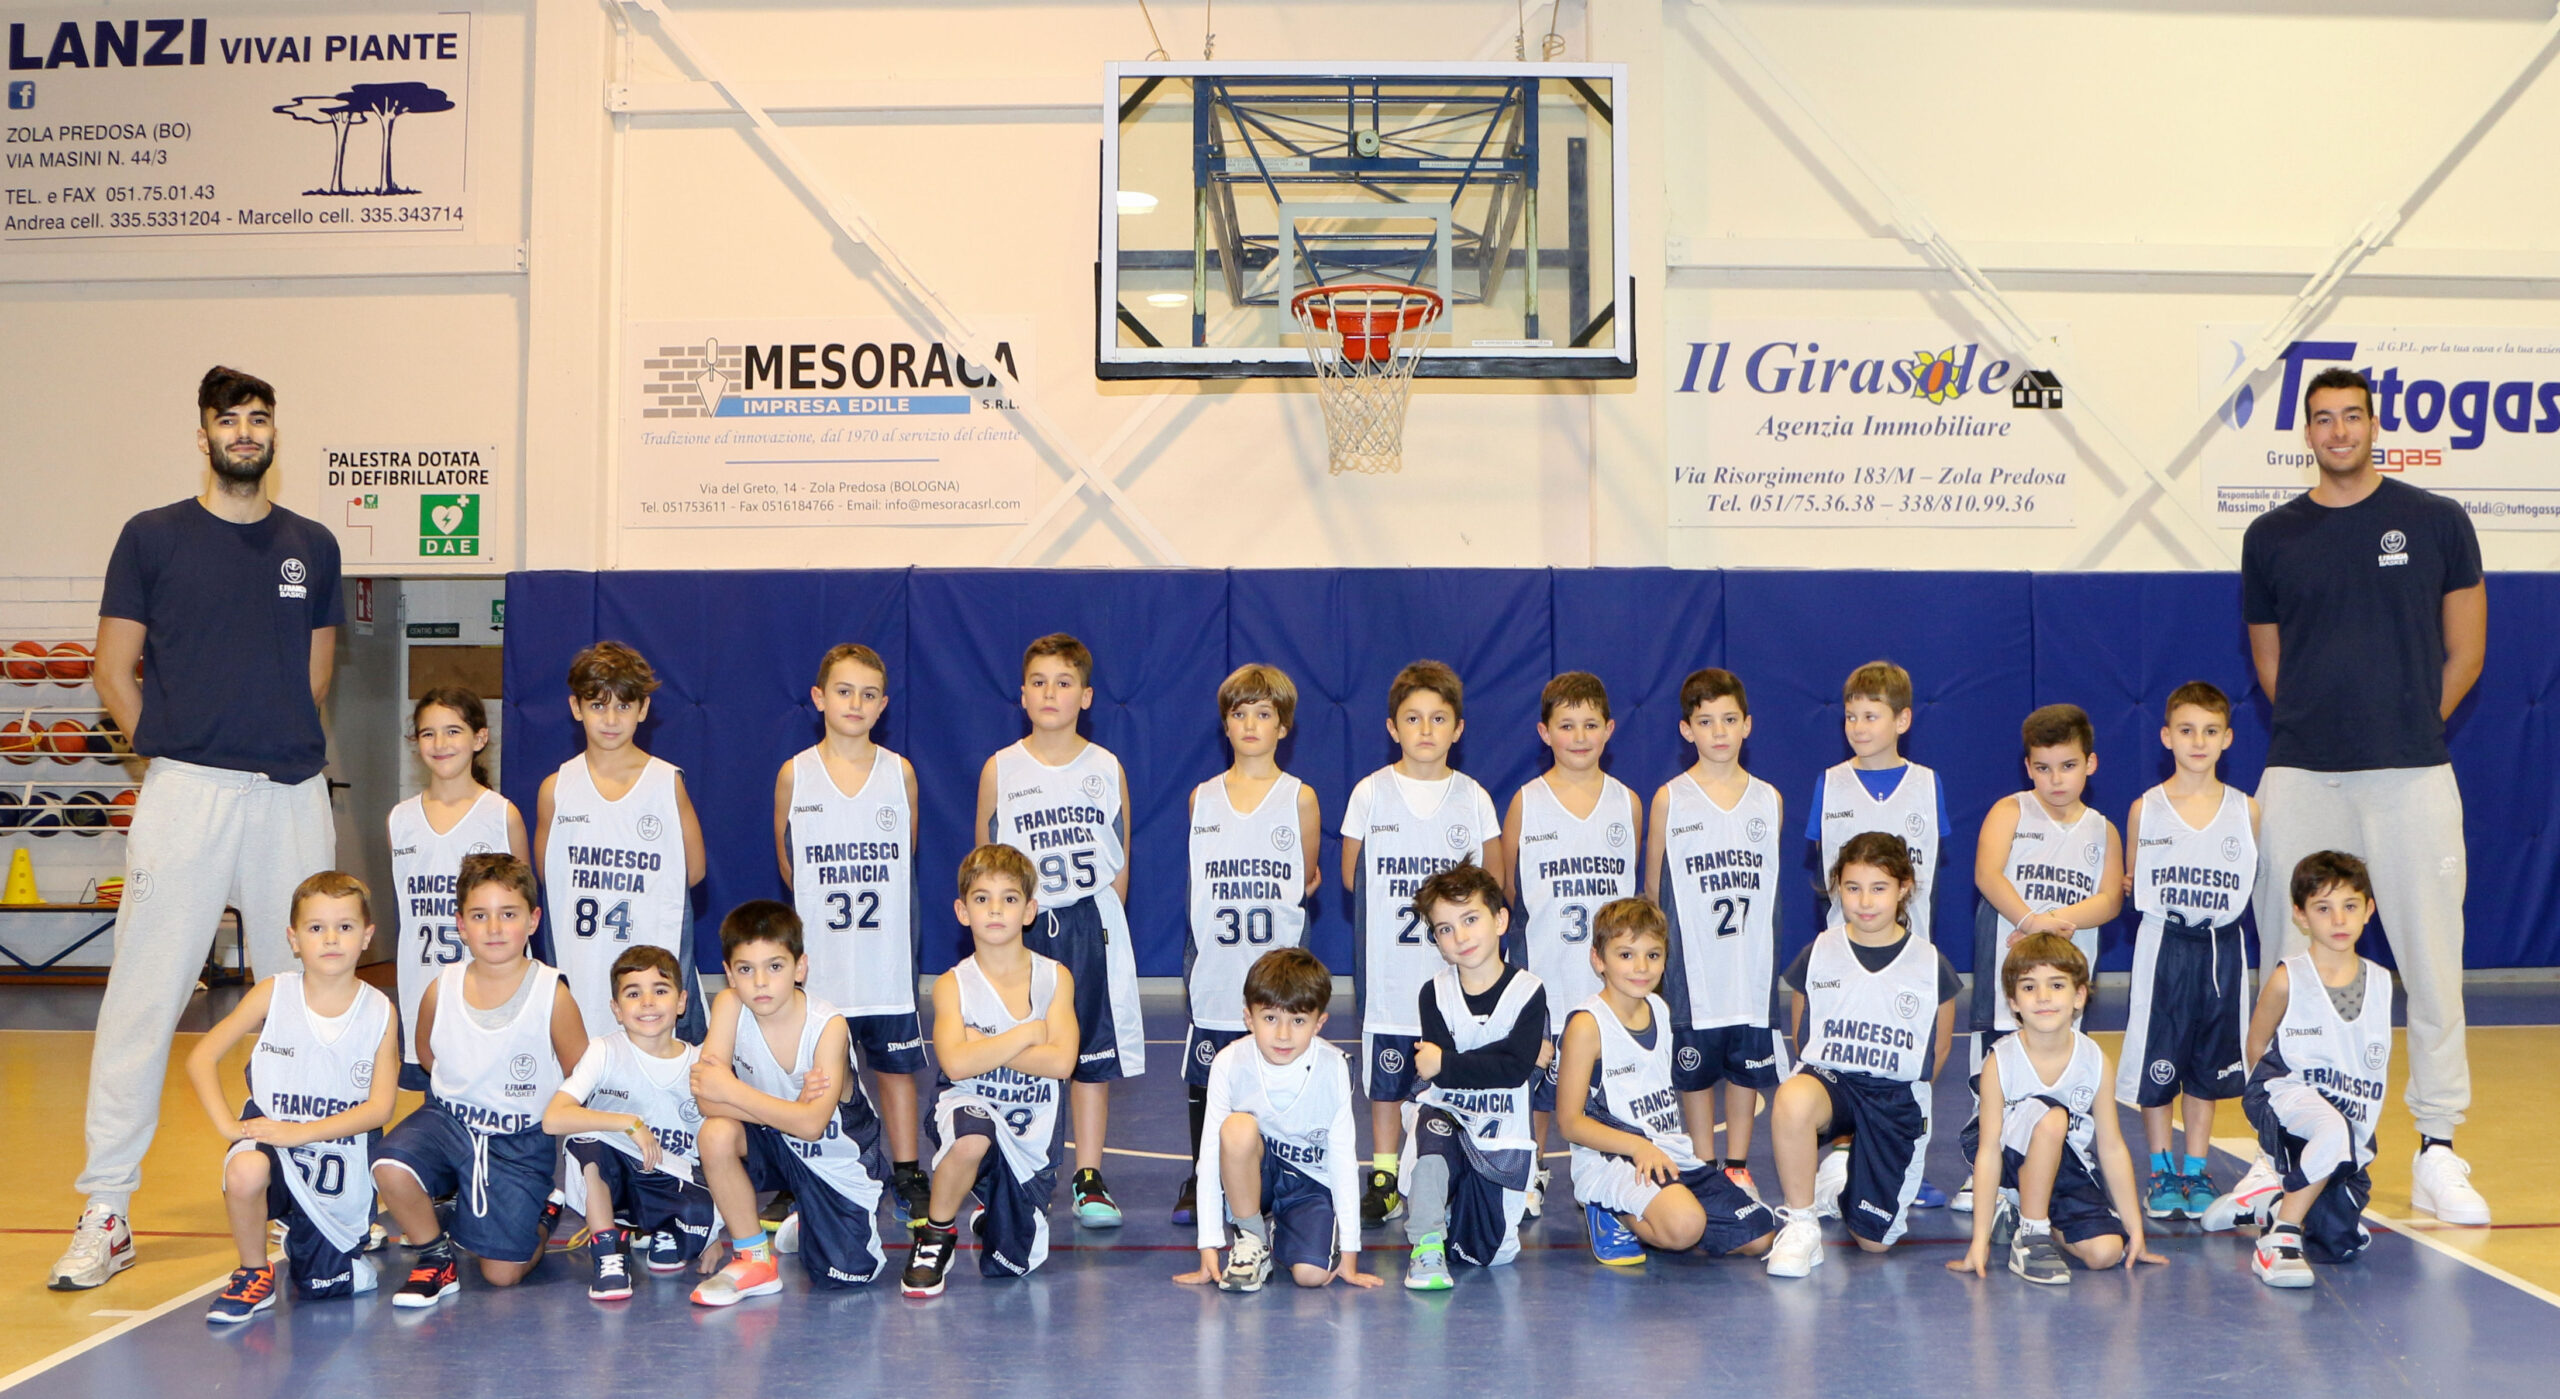 Squadra Scoiattoli 2014 - Francesco Francia Basket